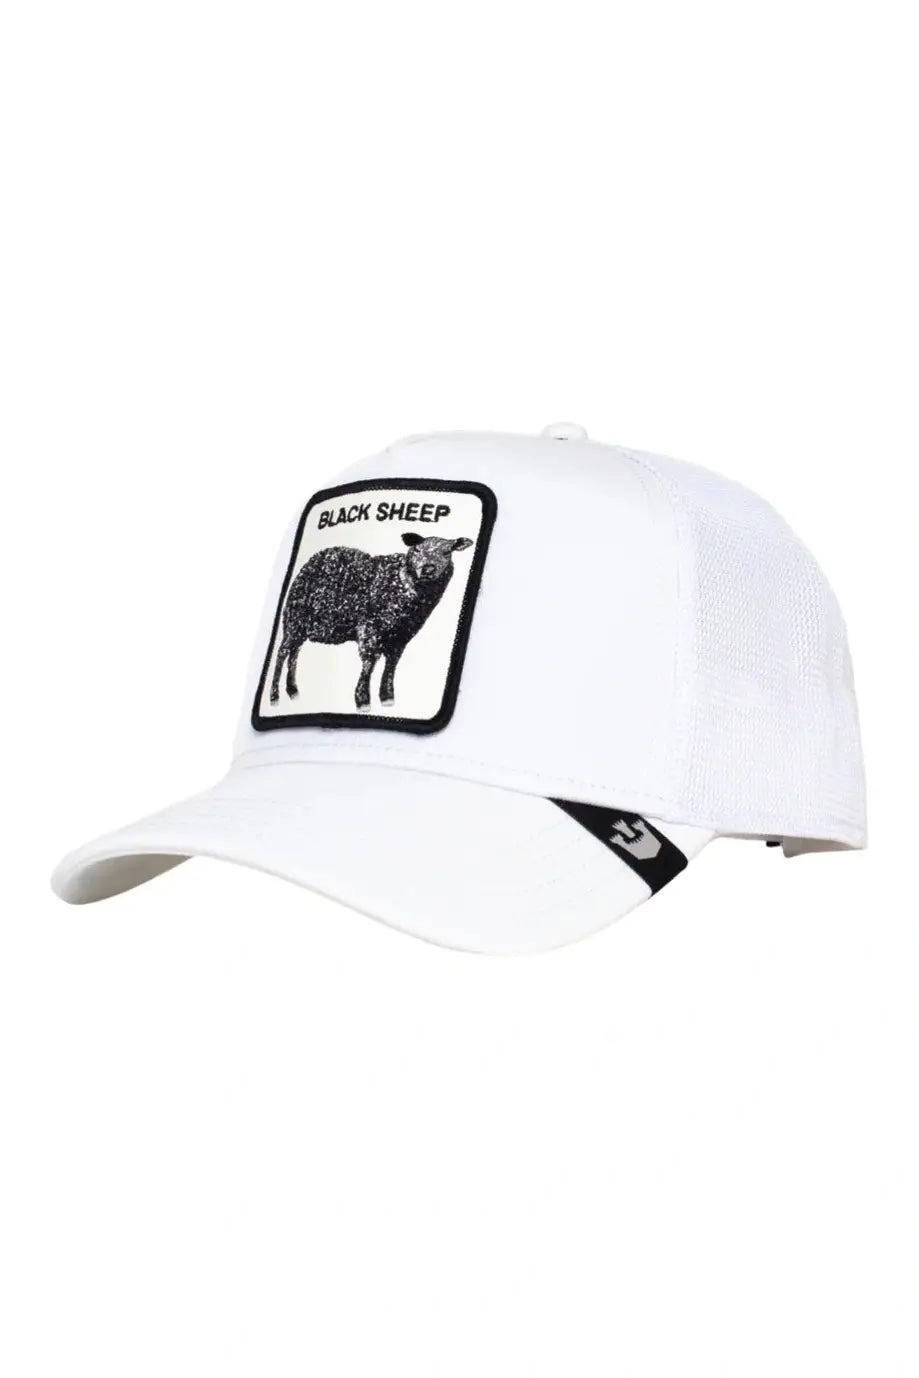 GOORIN - כובע מצחייה PLATINUM SHEEP בצבע לבן - MASHBIR//365